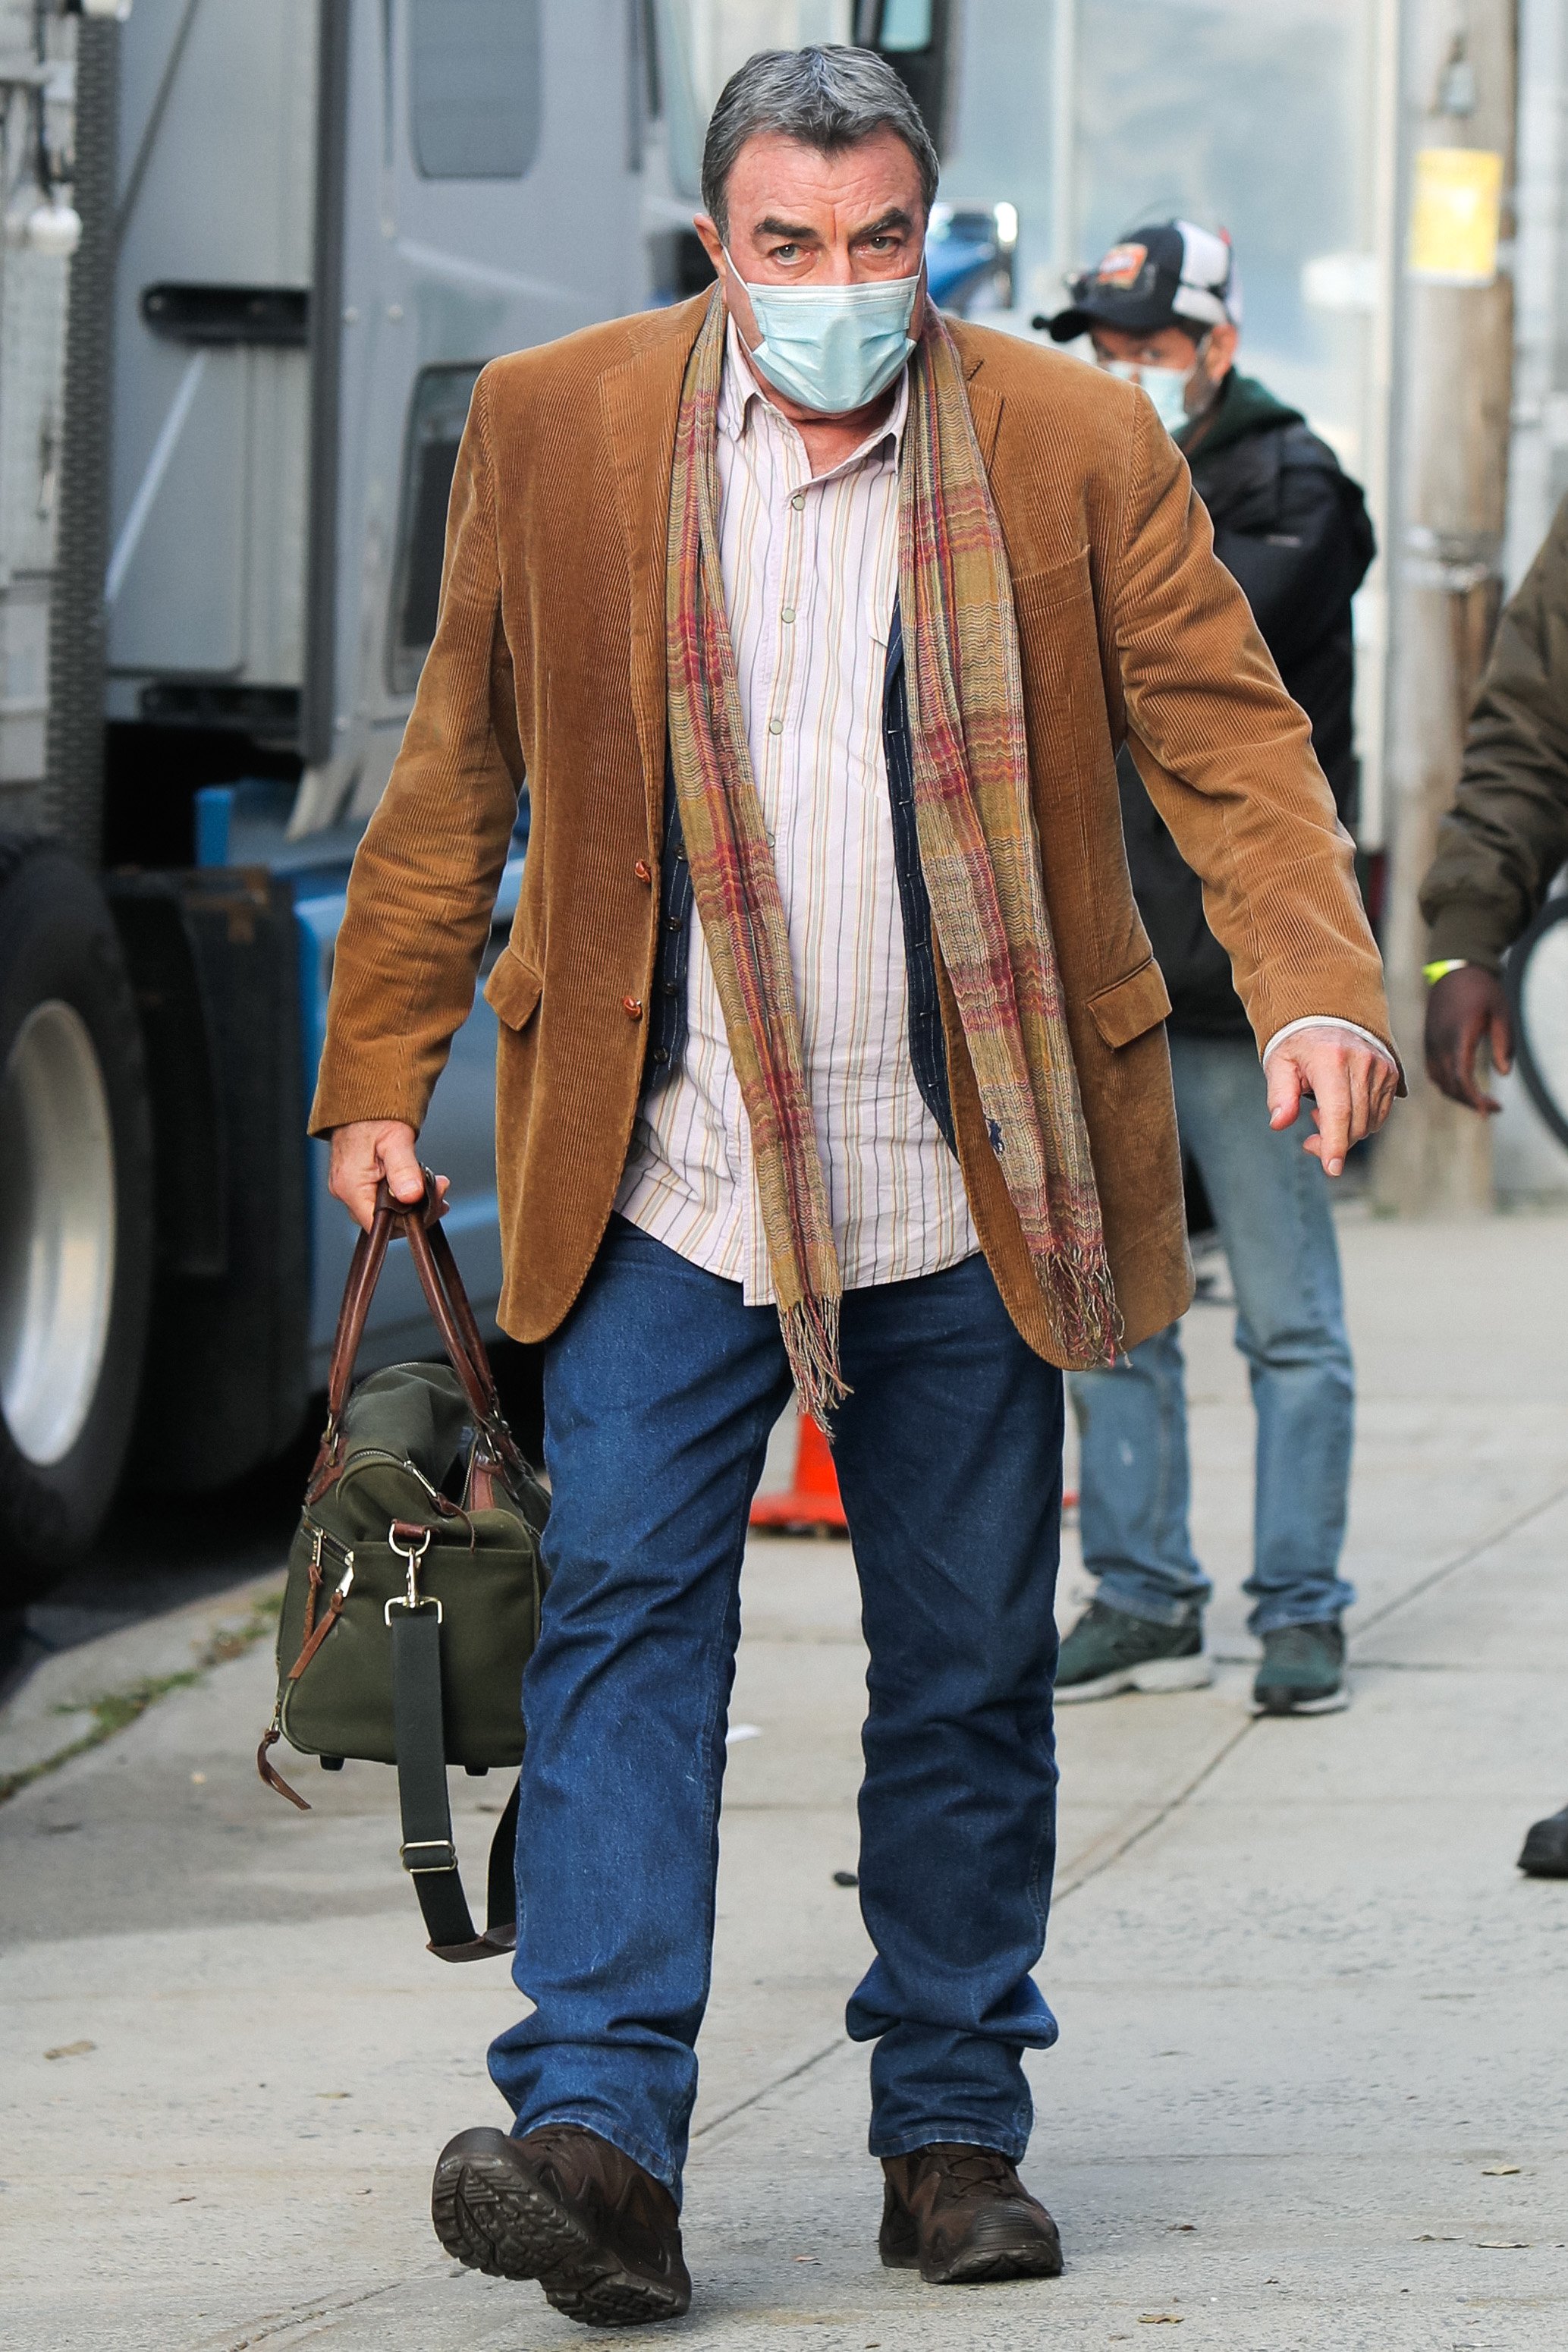 Tom Selleck am Filmset der Fernsehserie "Blue Bloods" am 20. Oktober 2020 in New York City. | Quelle: Getty Images